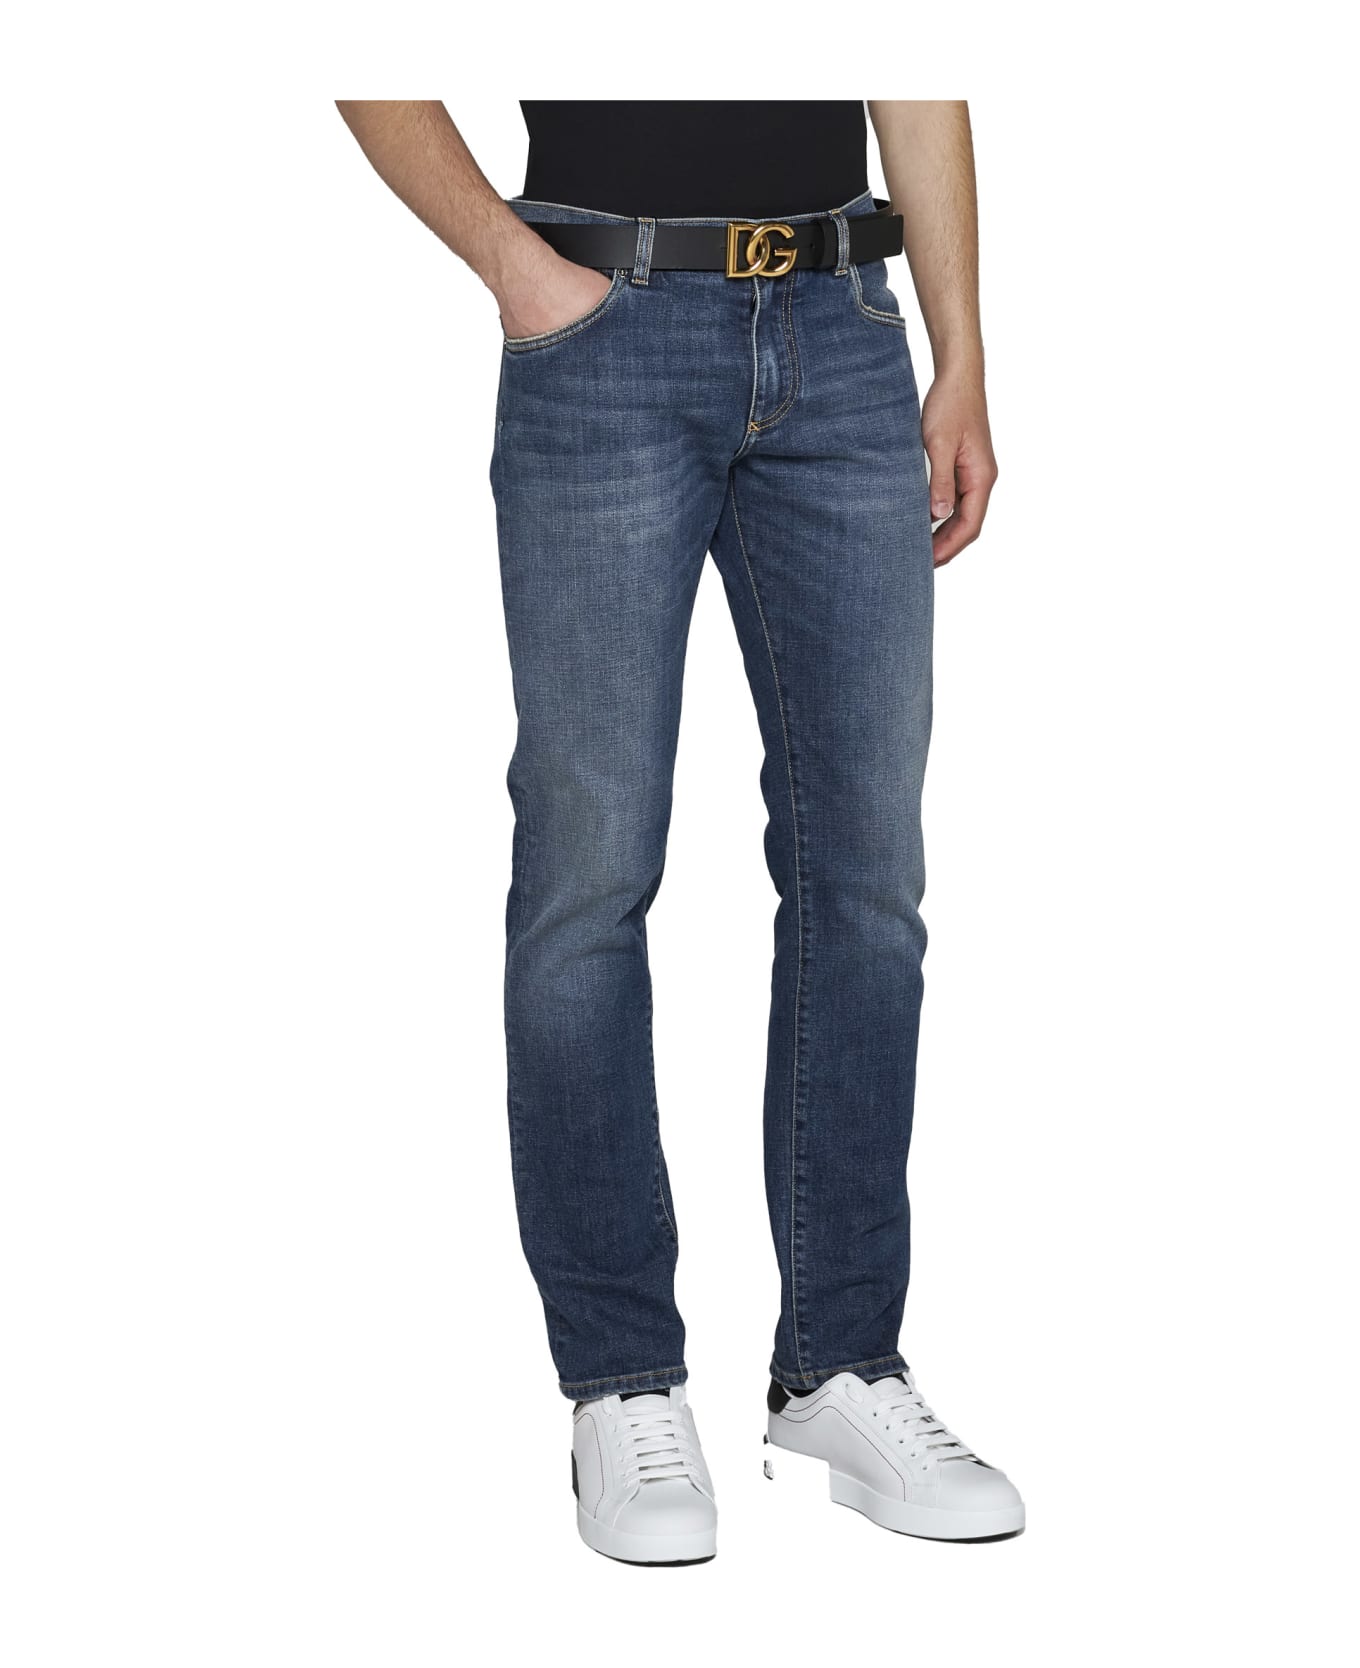 Dolce & Gabbana Slim Fit Jeans - Denim